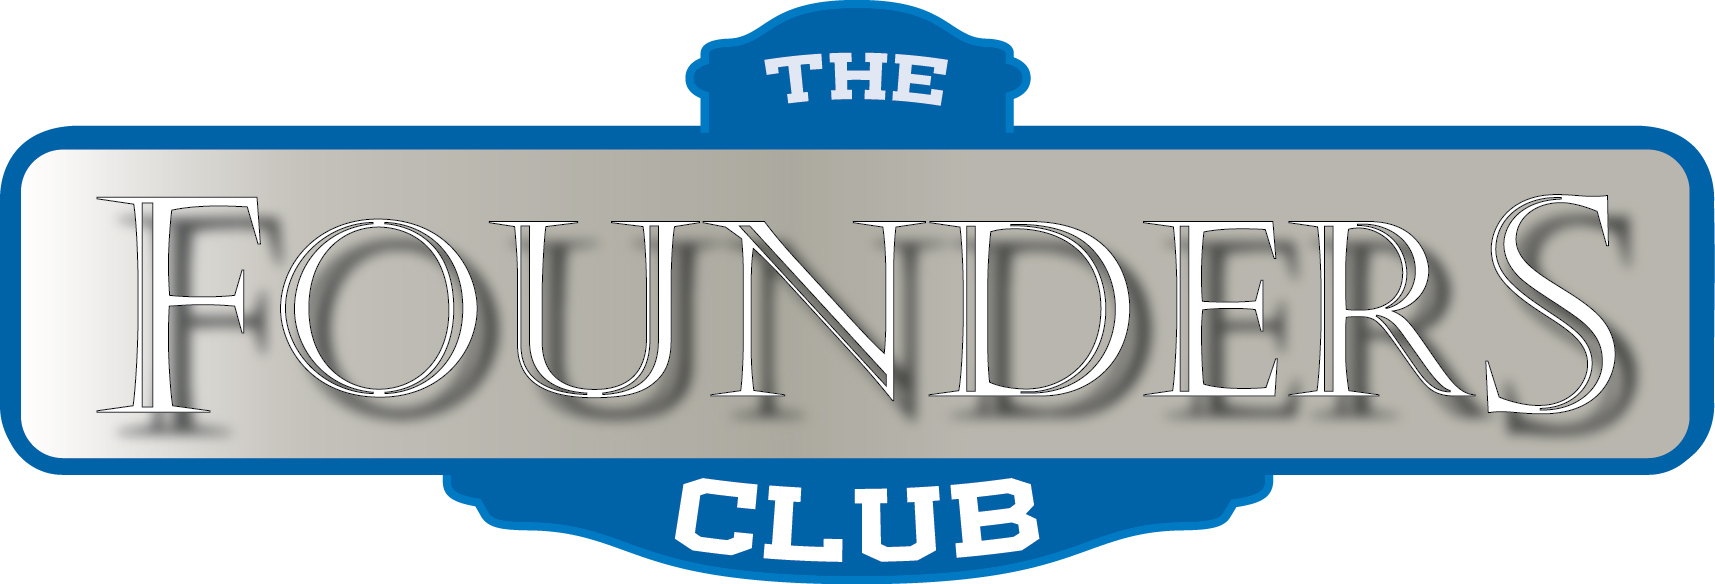 Founders club logo ata colors